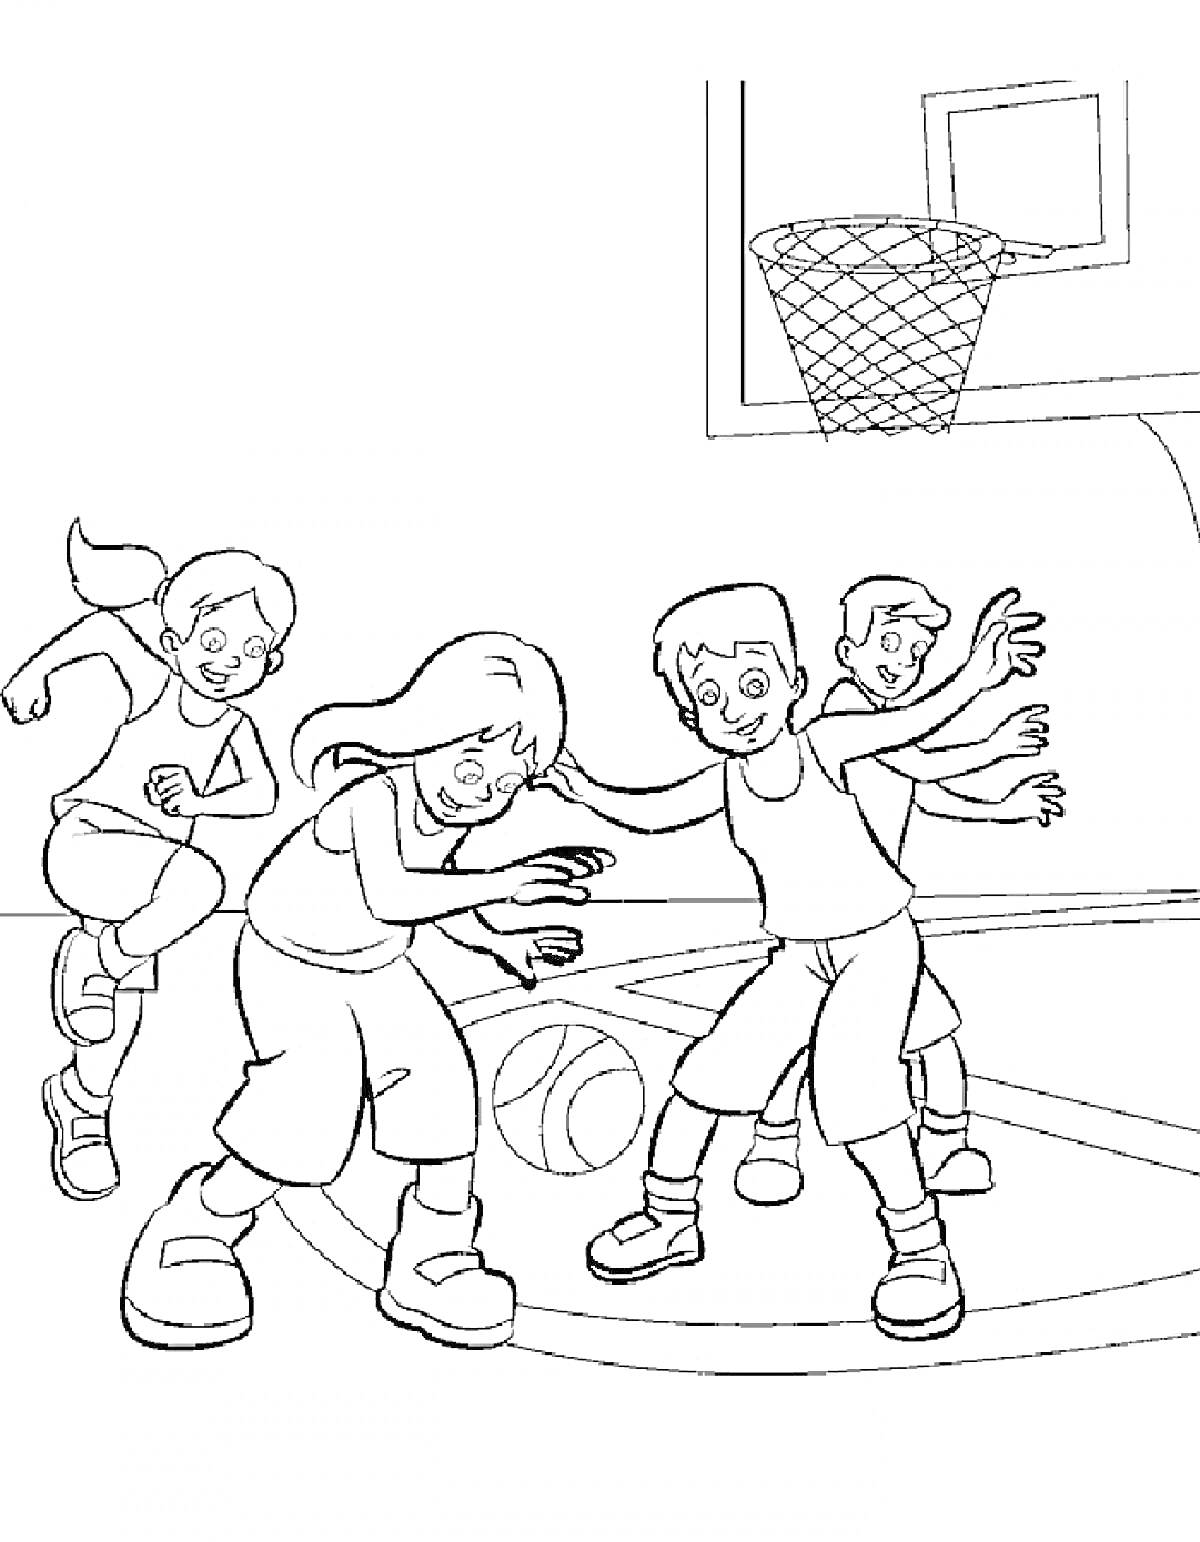 На раскраске изображено: Баскетбол, Кольцо, Спорт, Игра, Спортзал, Для детей, Мячи